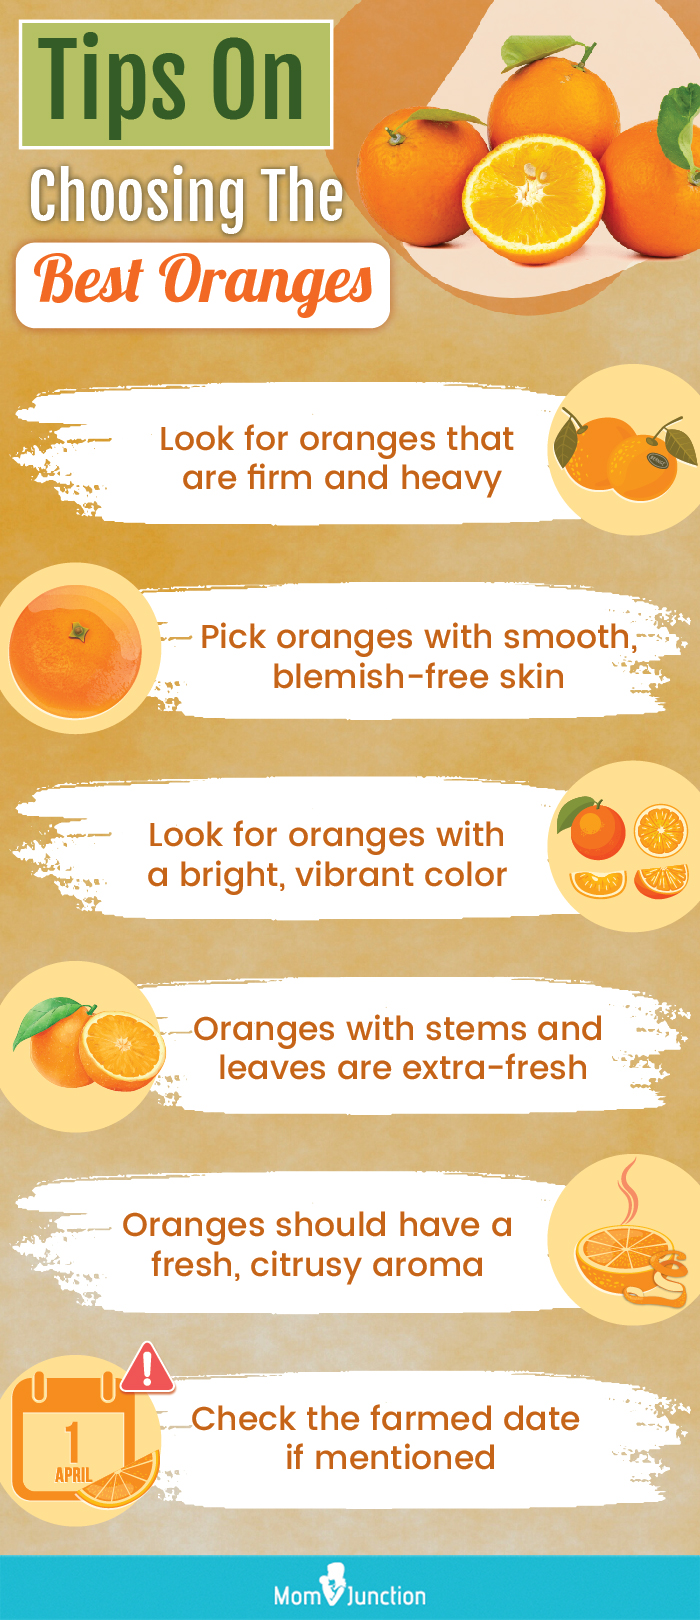 The health benefits of oranges